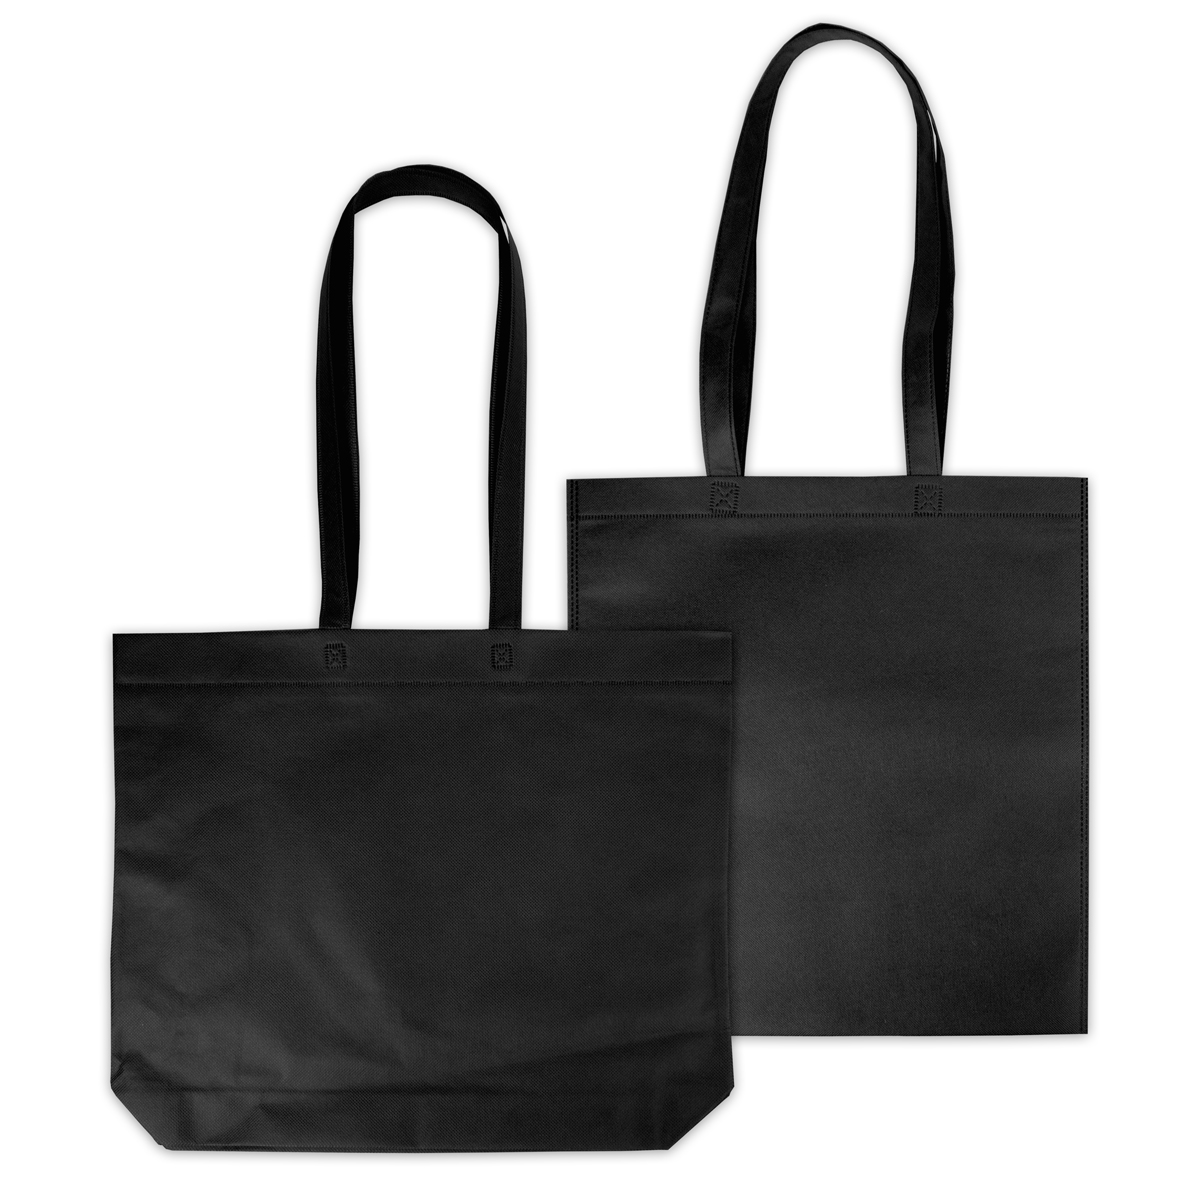 Non-woven bags with long handles